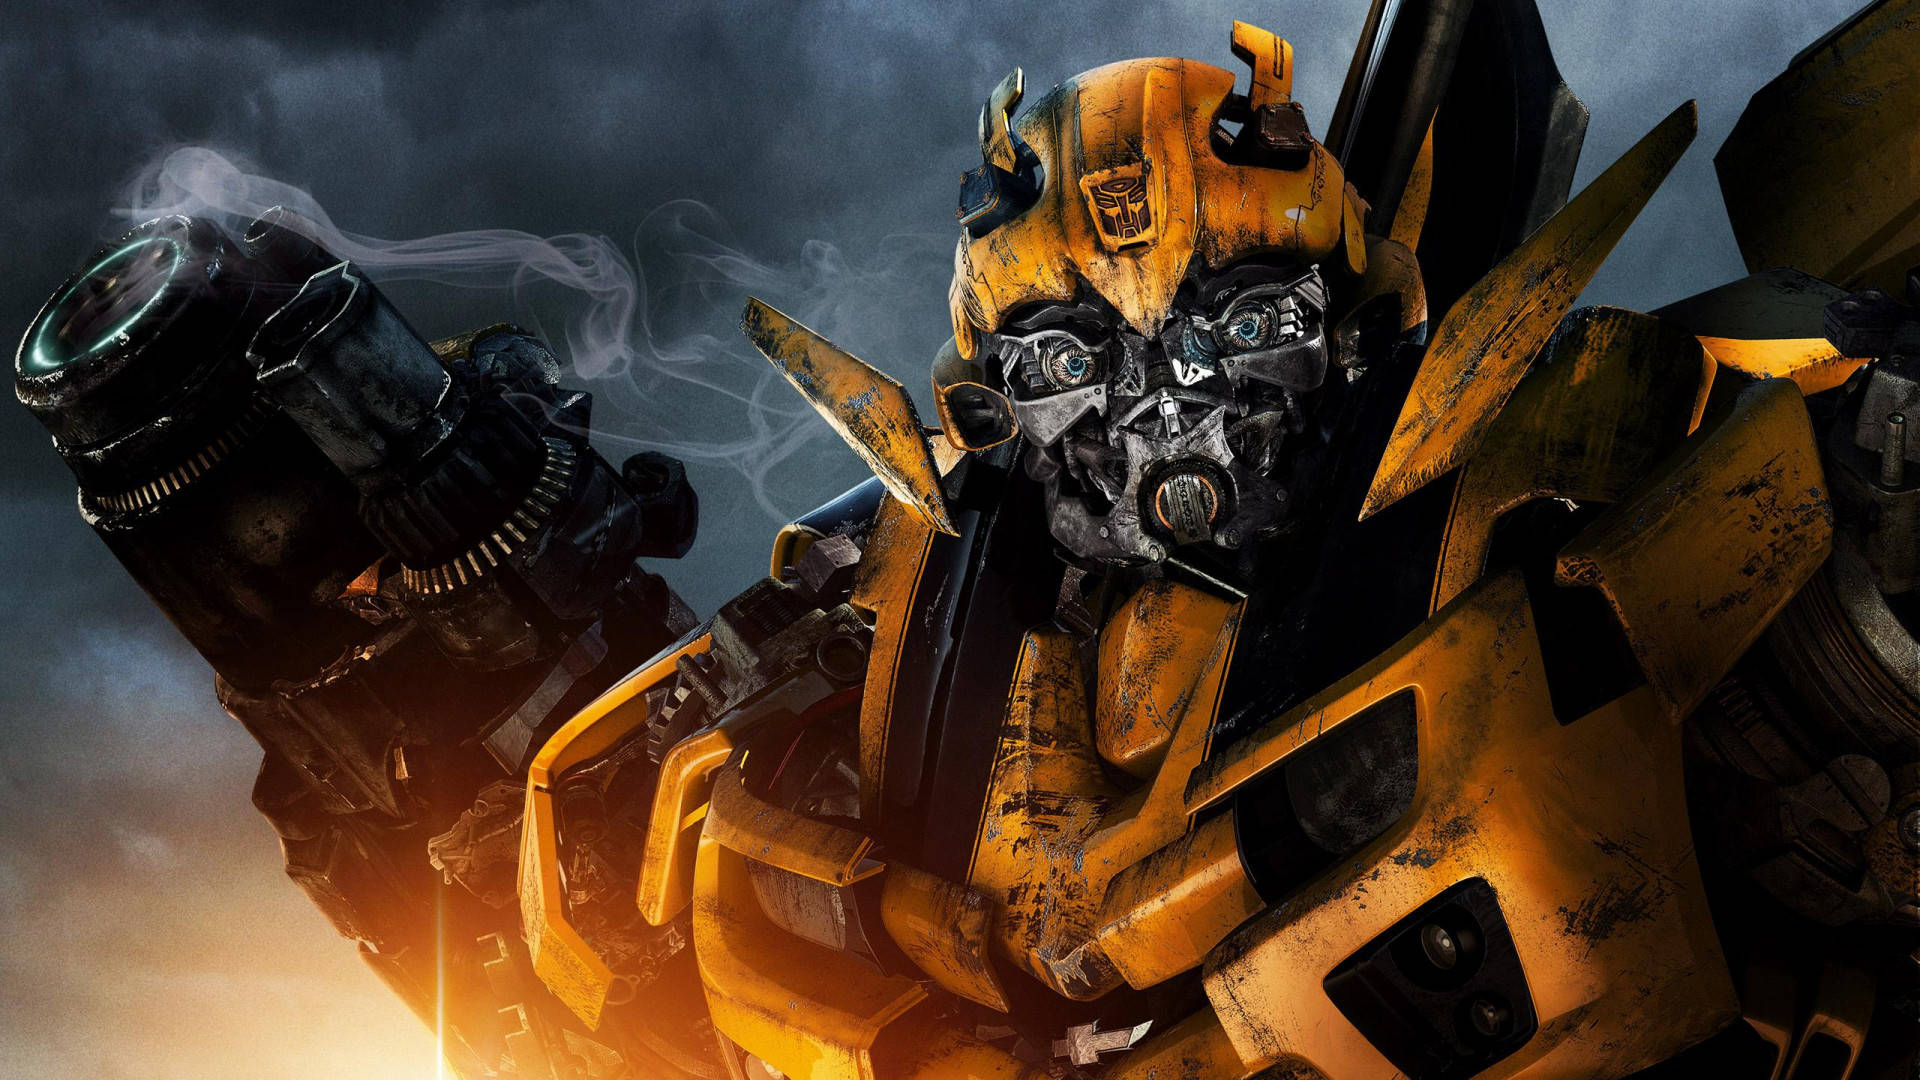 Transformers Bumblebee Robot Background